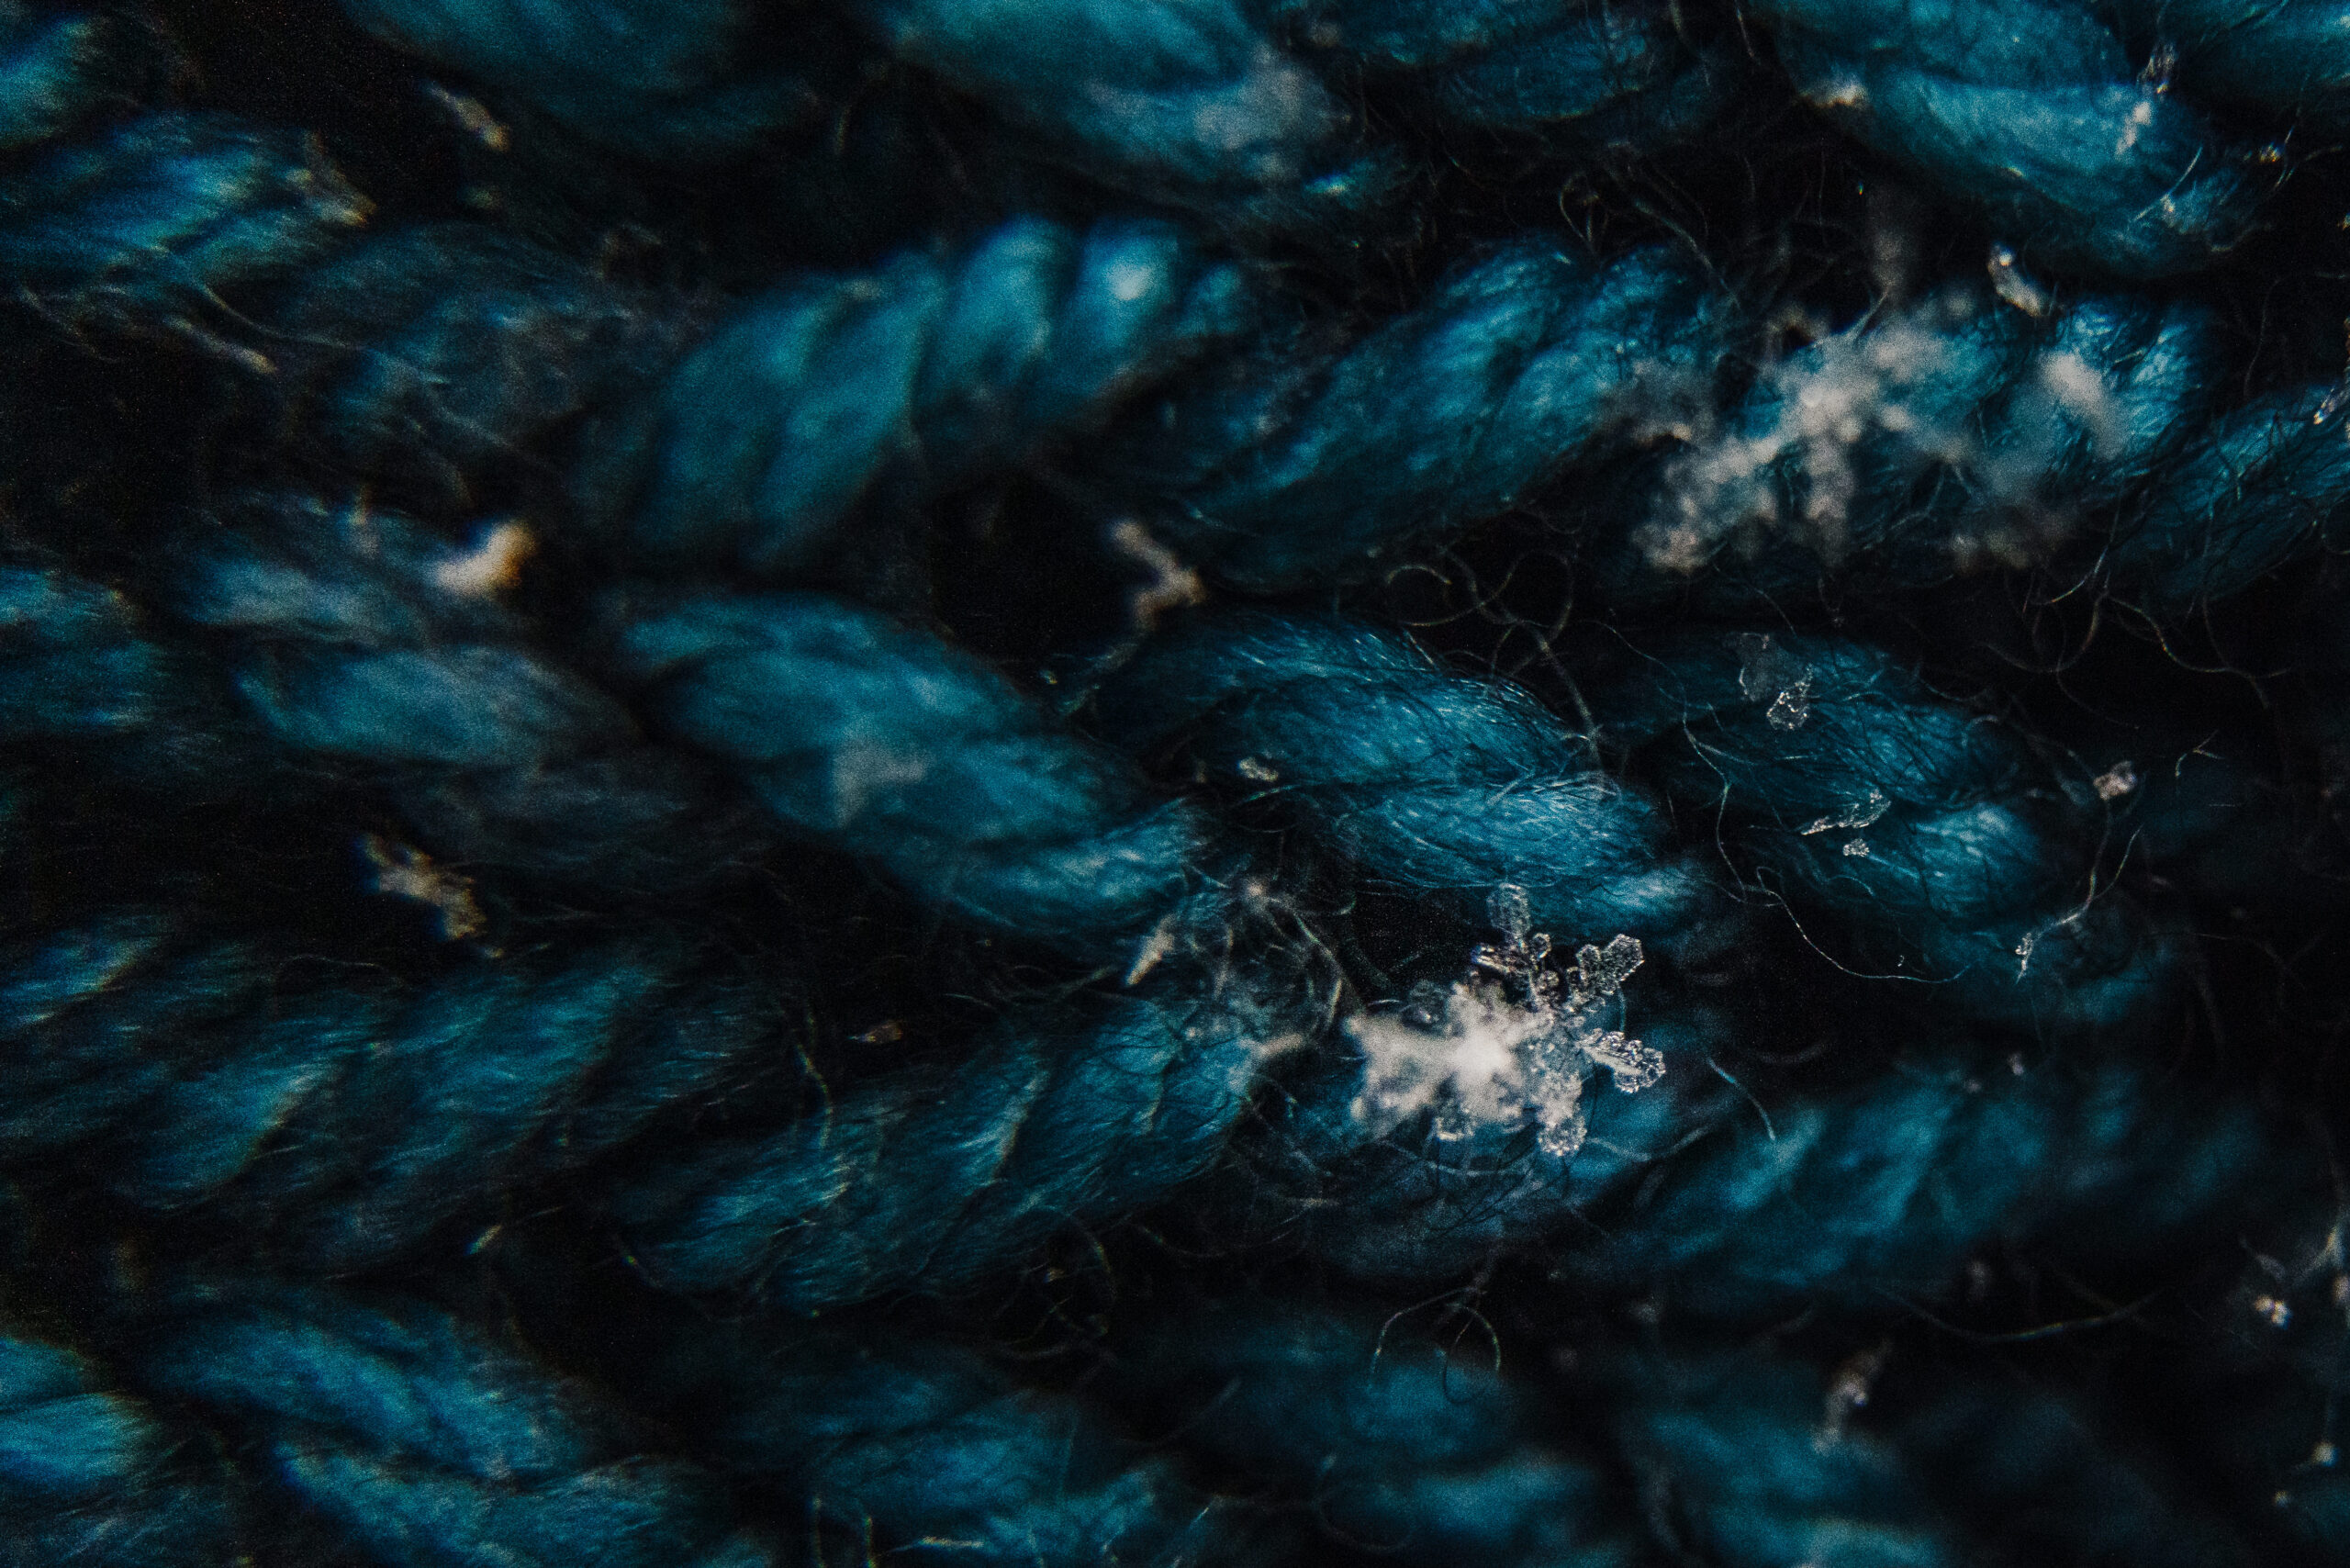 Macro image of snowflake captured on blue fabric cloth.